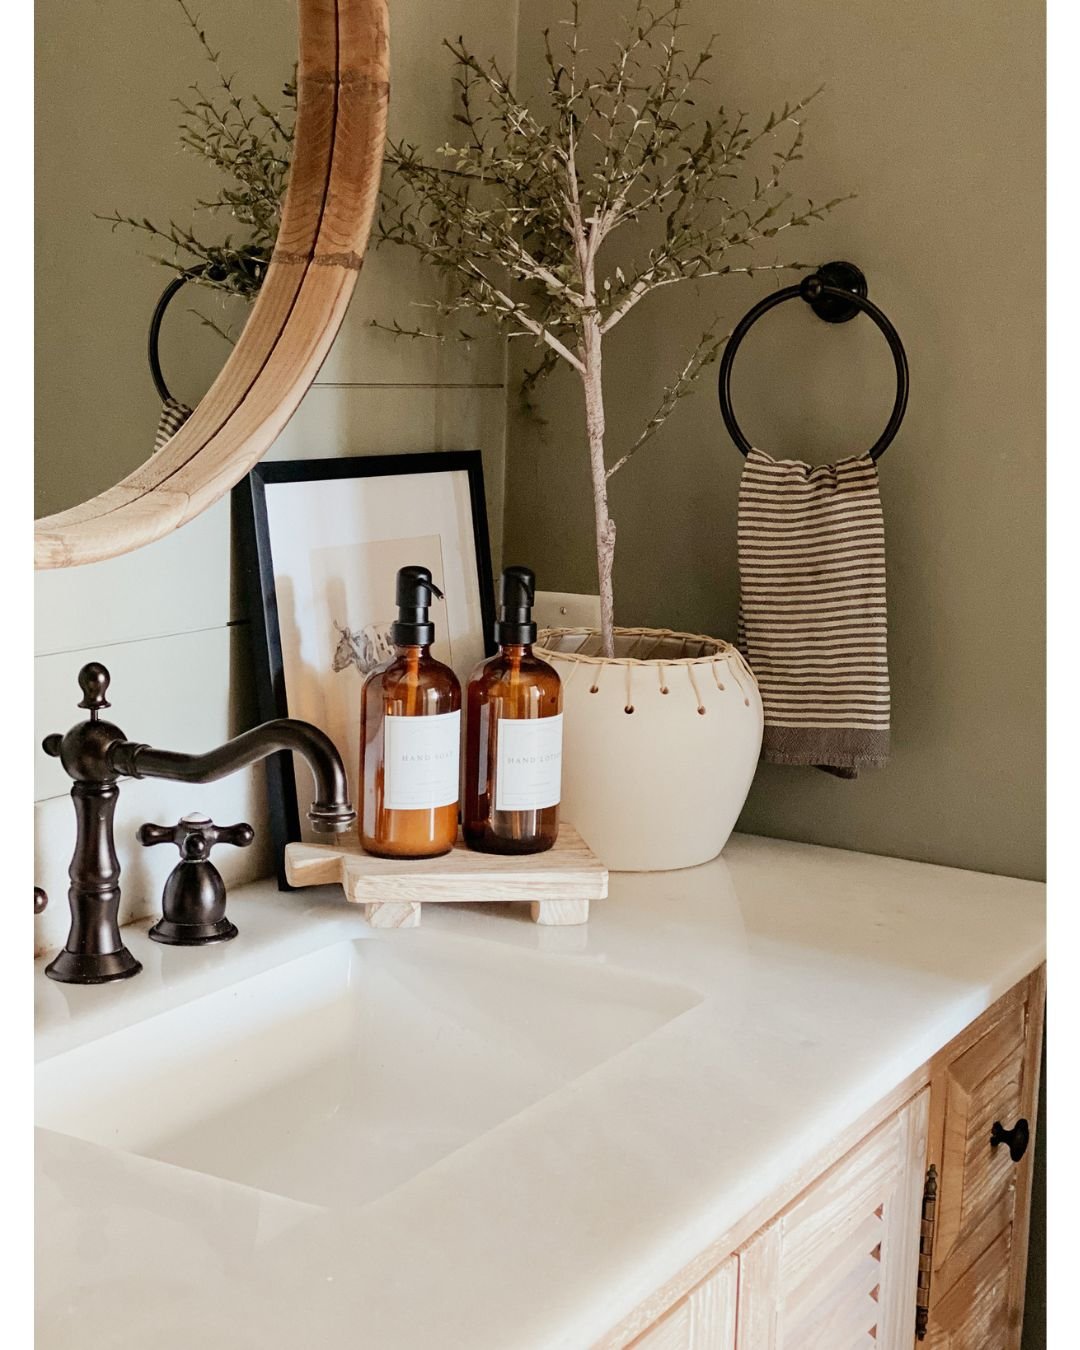 How to:: Design a Timeless Modern Classic Bathroom — Porche & Co.